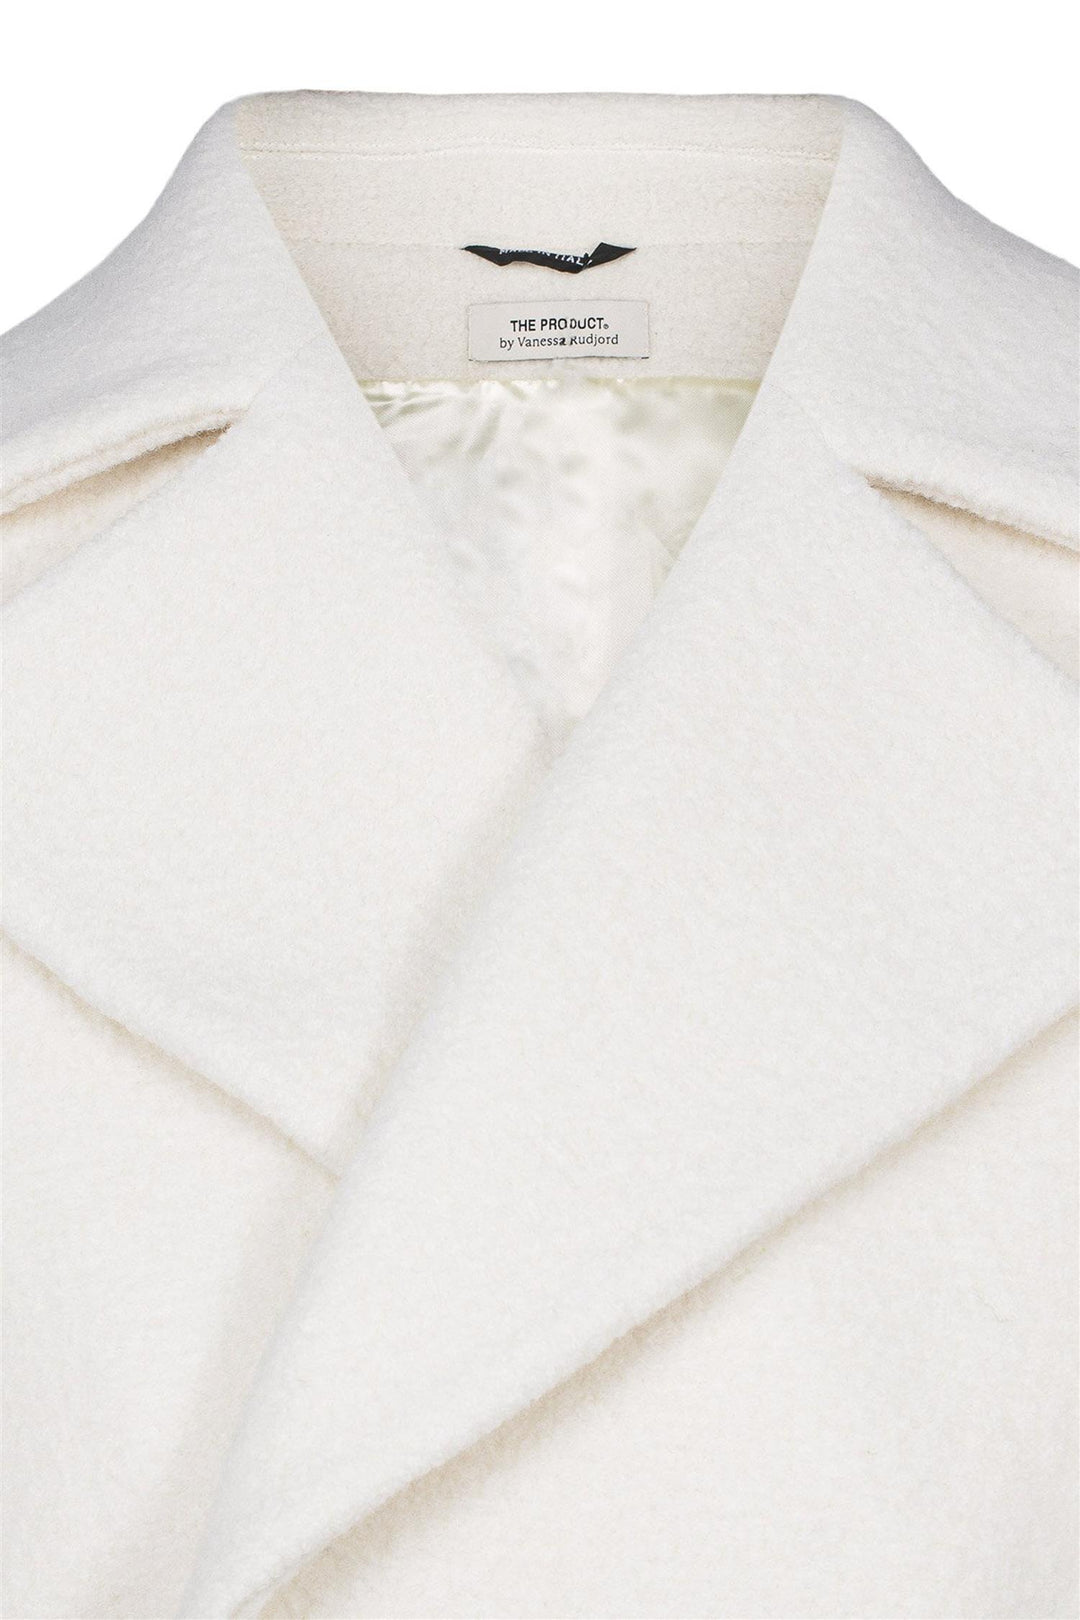 Wool Coat Long White